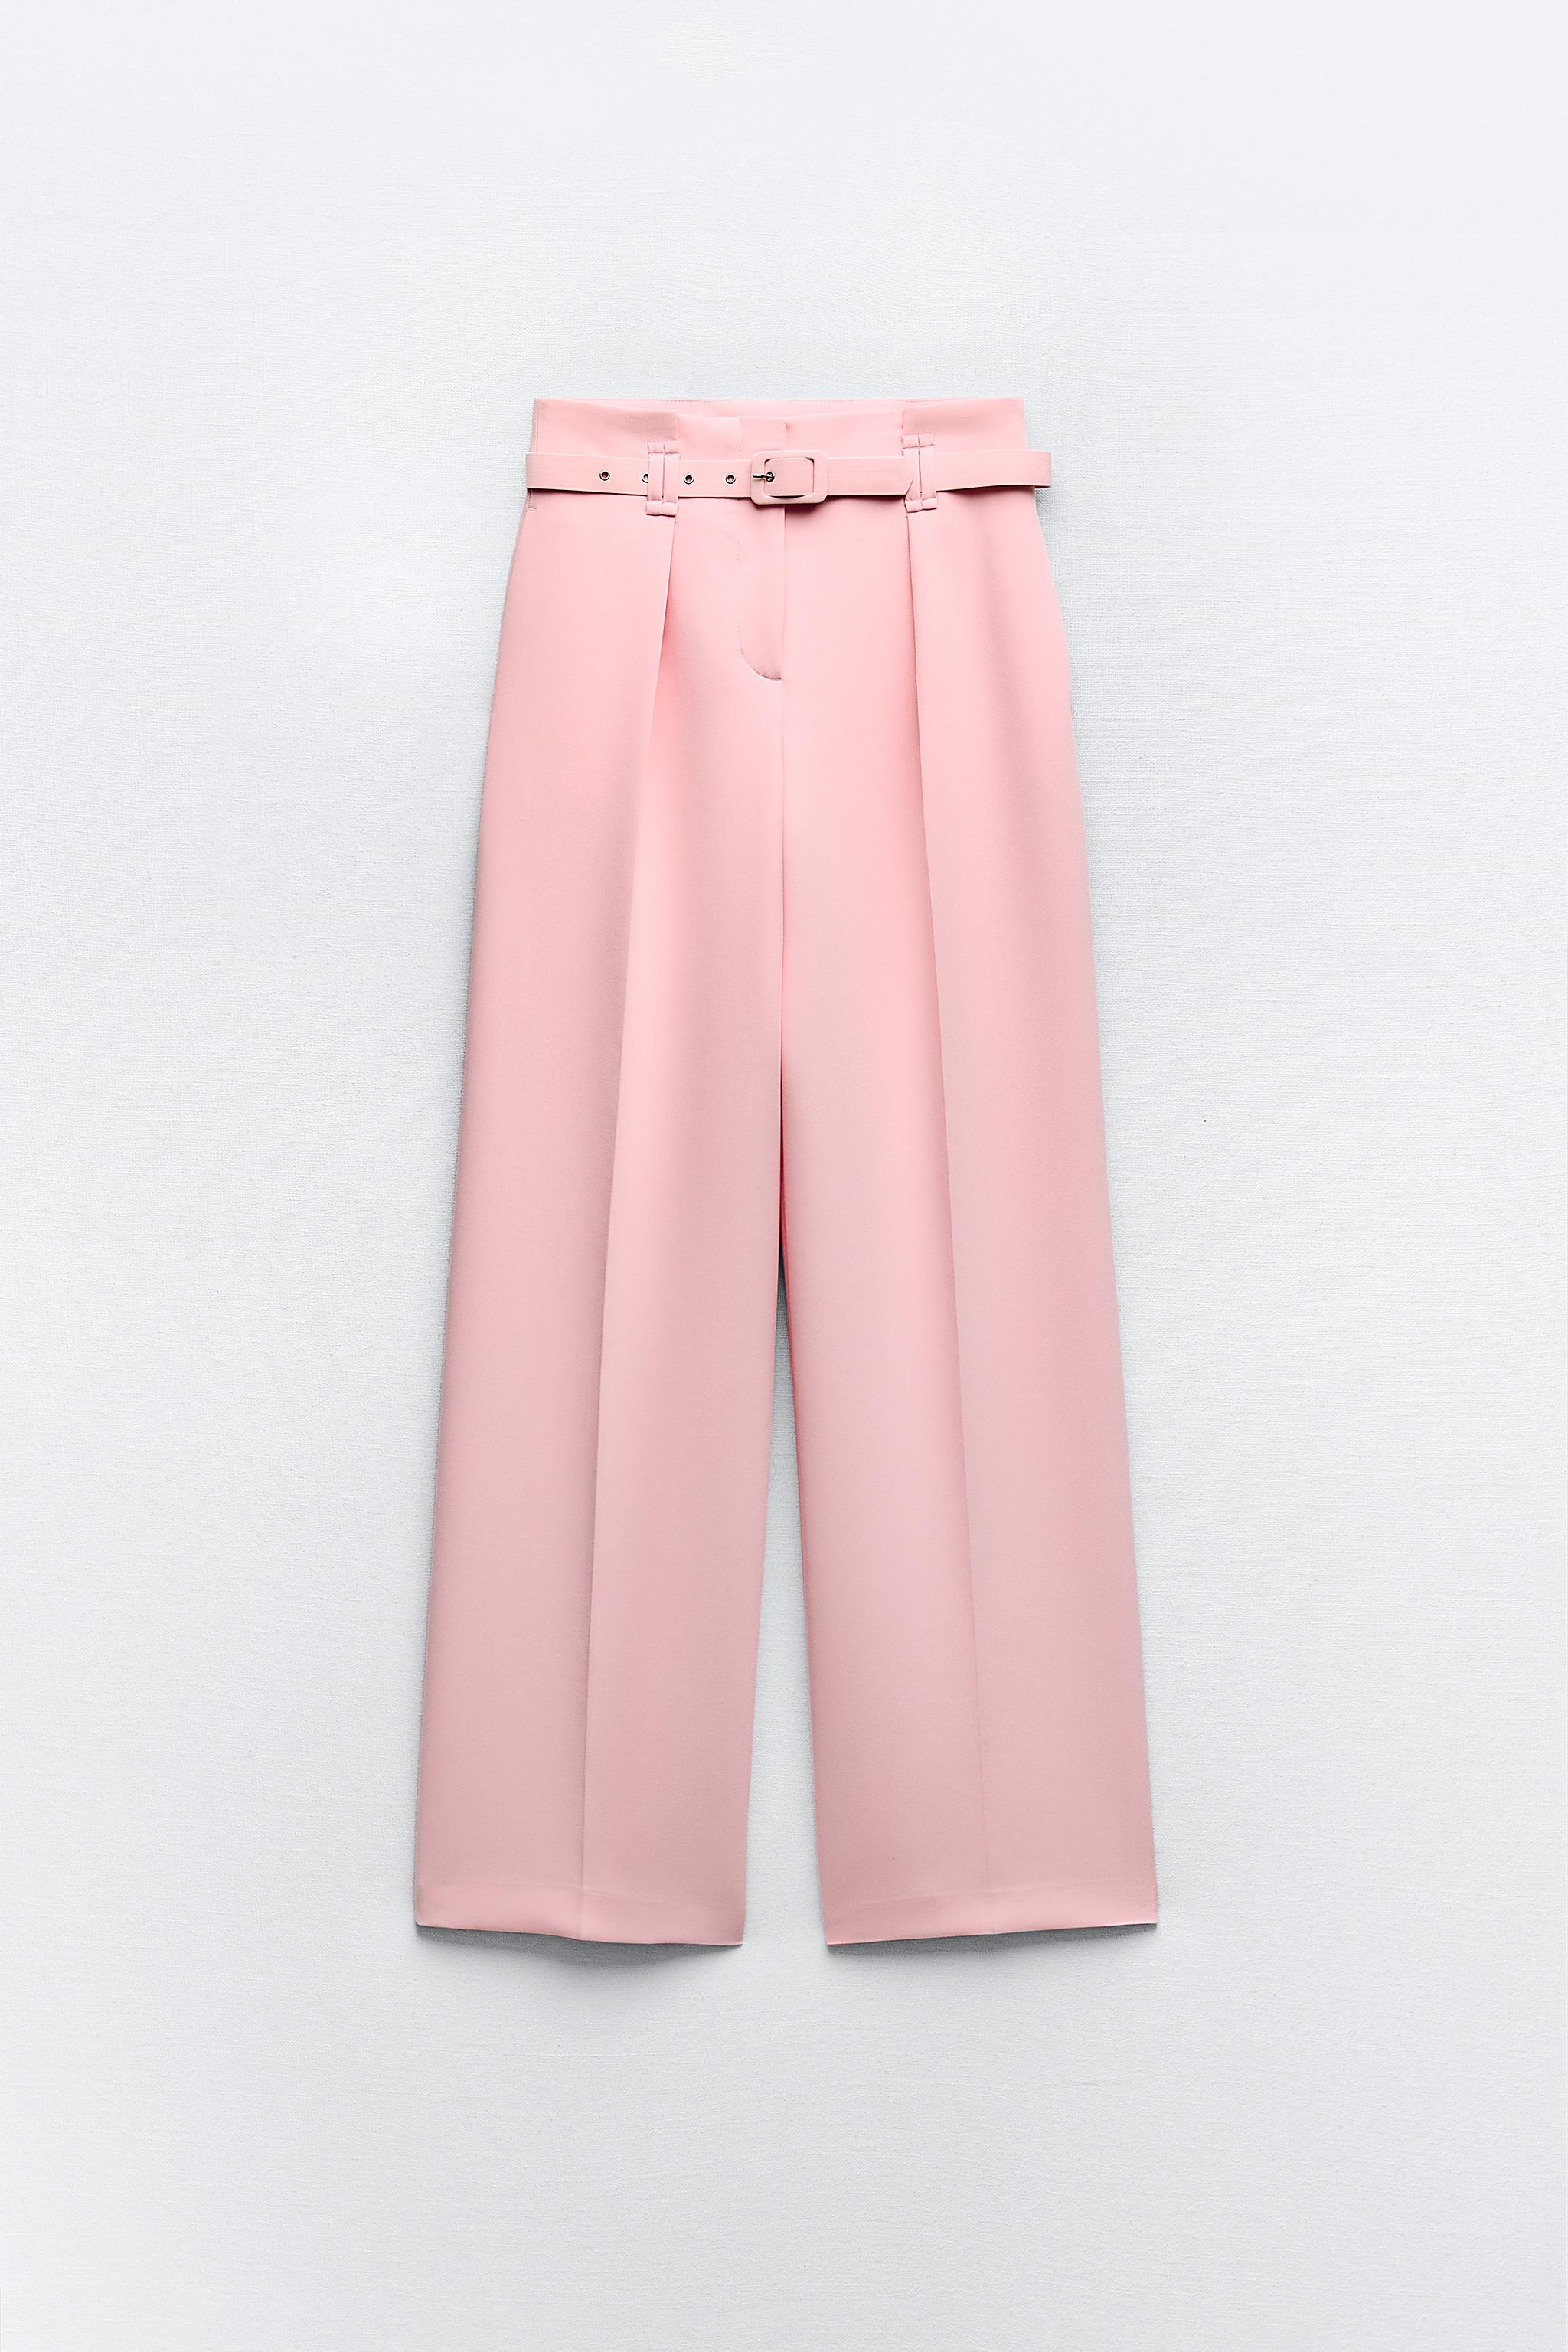 a few more Zara looks 🤍 Pink shirt 2665/103 Black trousers 2731/271